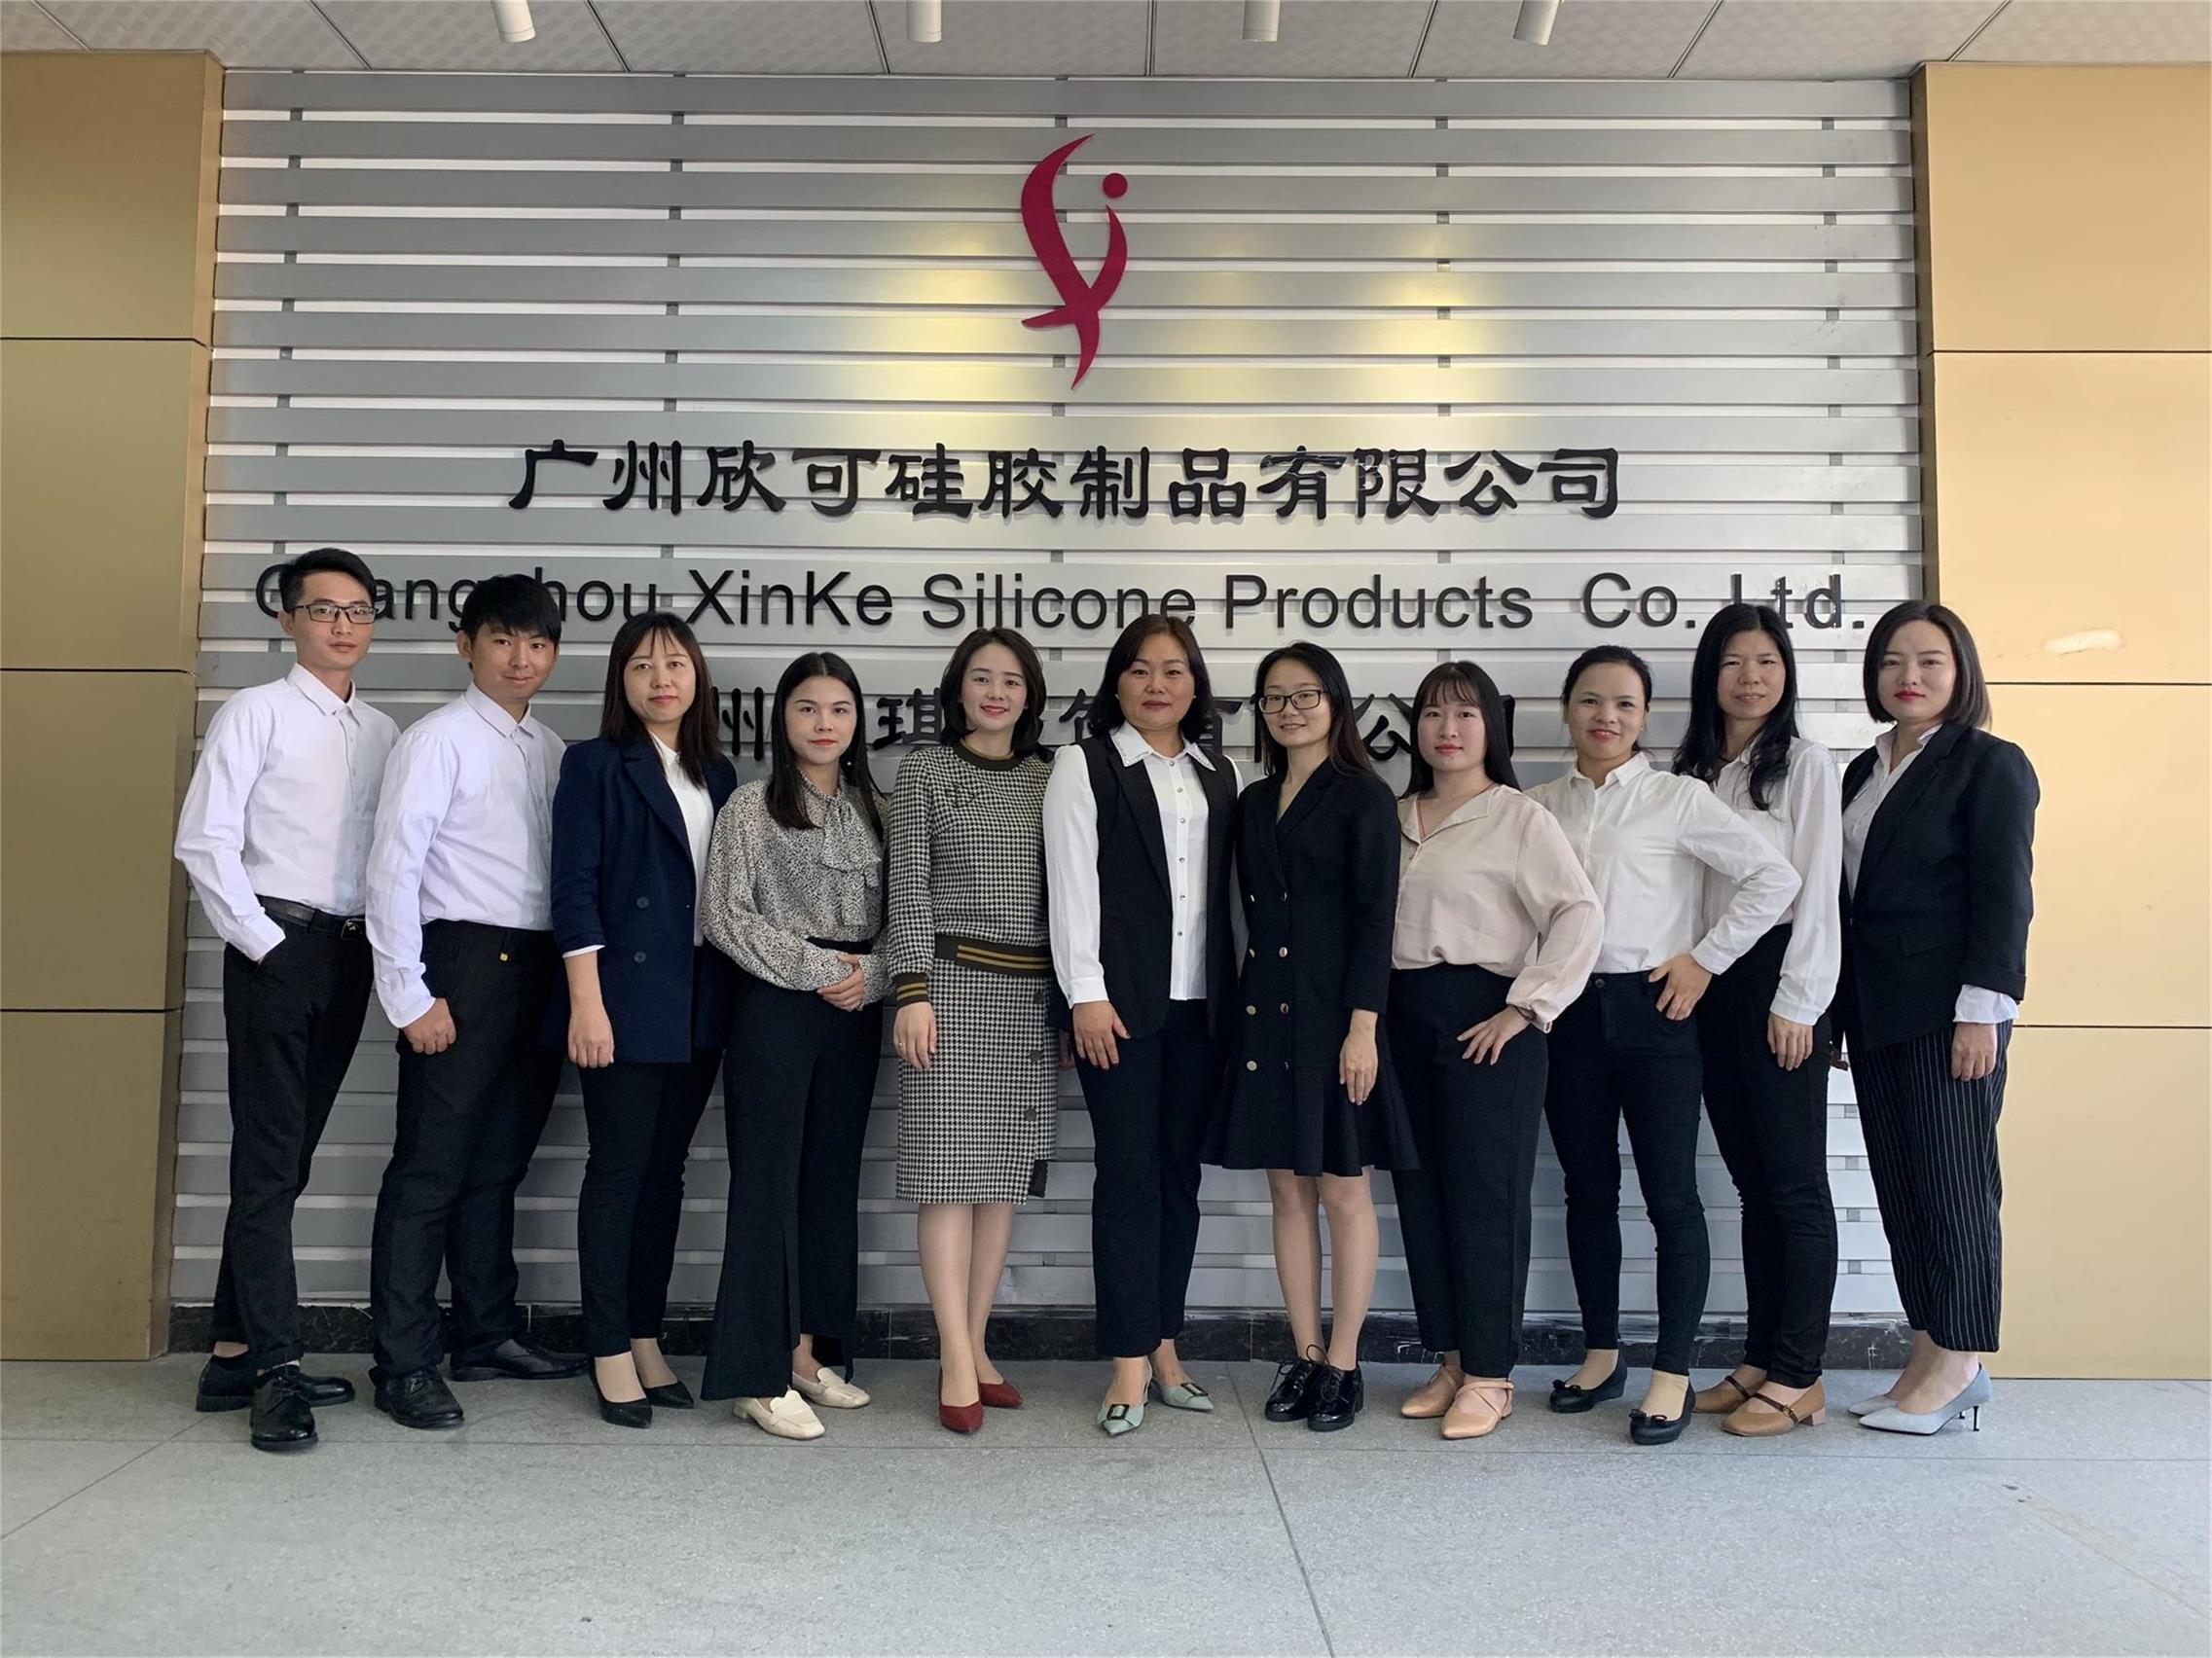 Guangzhou Xinke Silicone Products Co., Ltd.